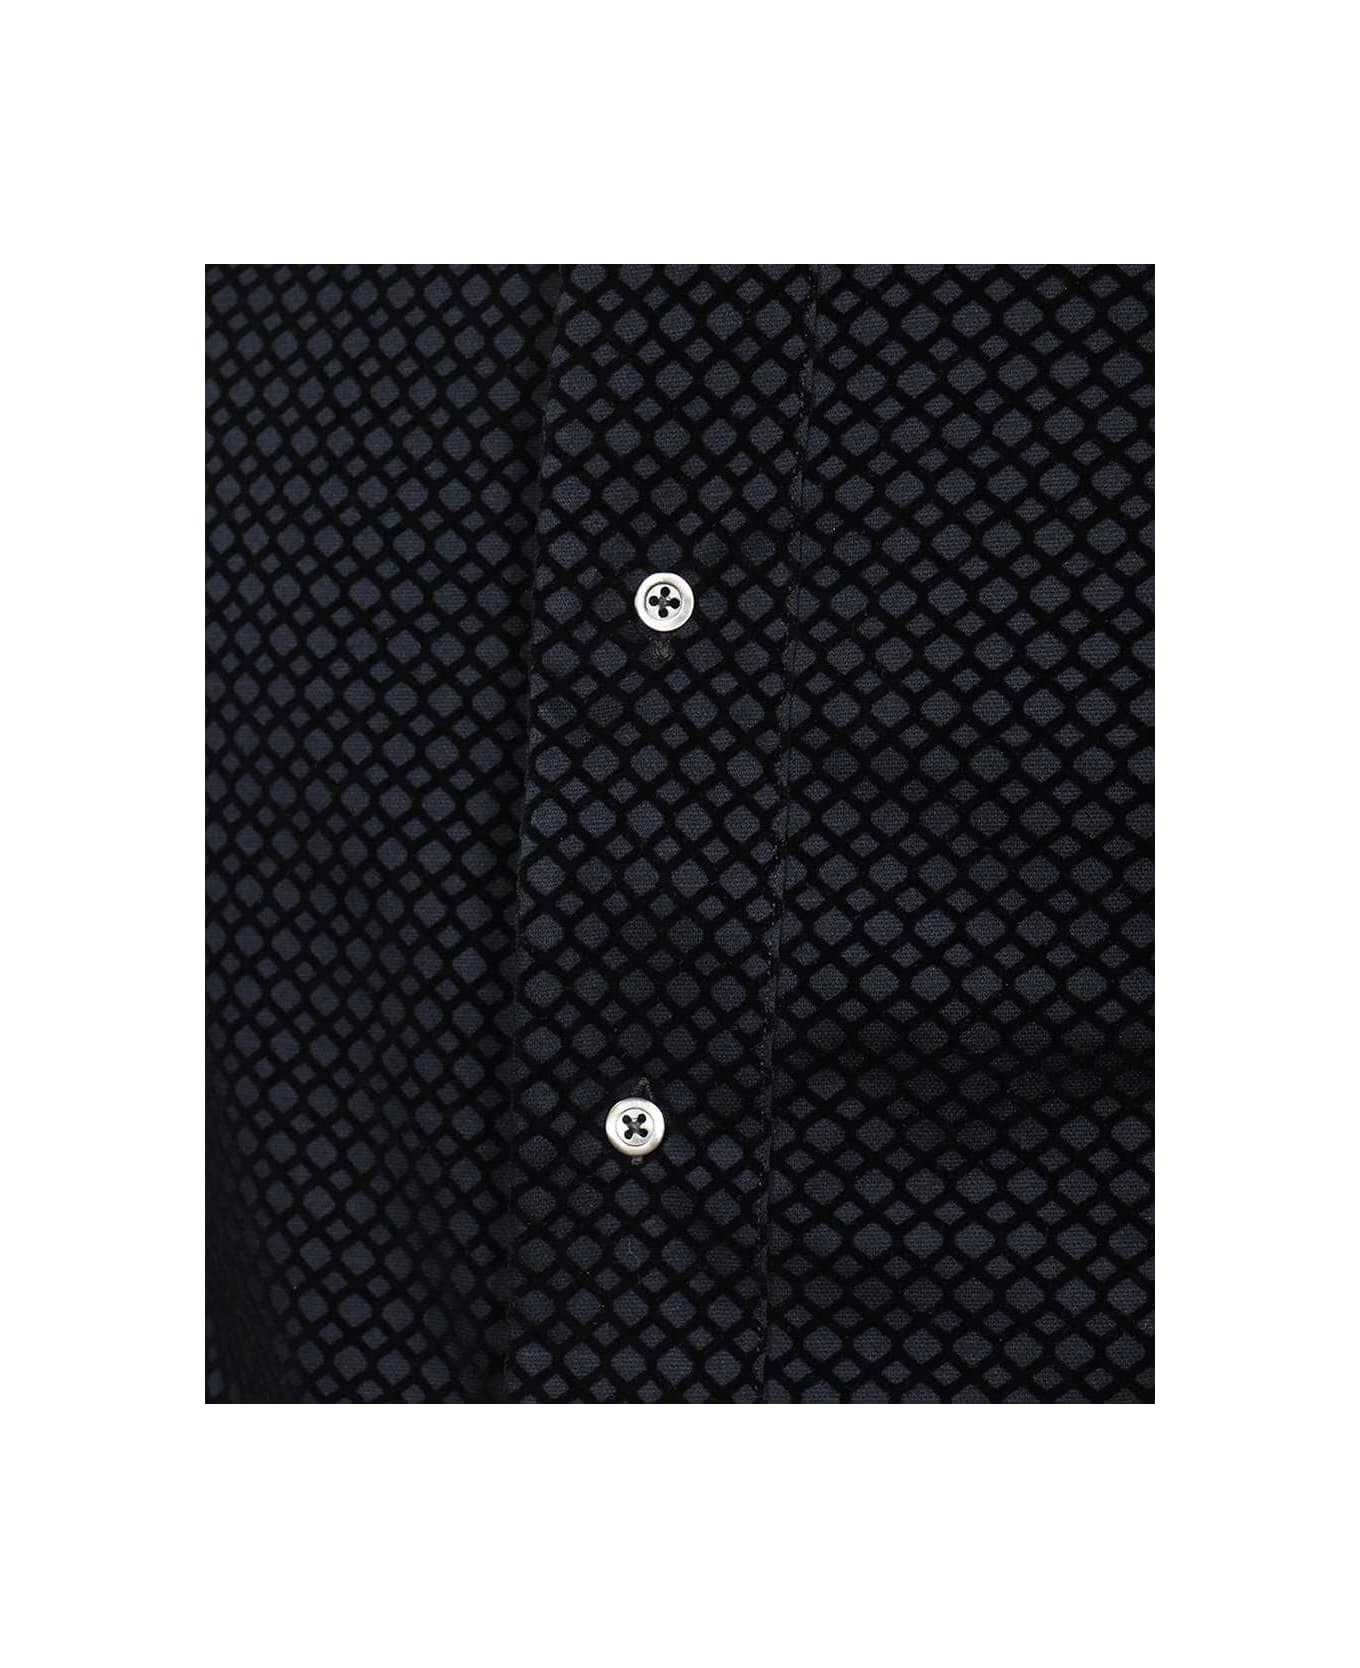 Emporio Armani Long Sleeve Cotton Shirt - black シャツ